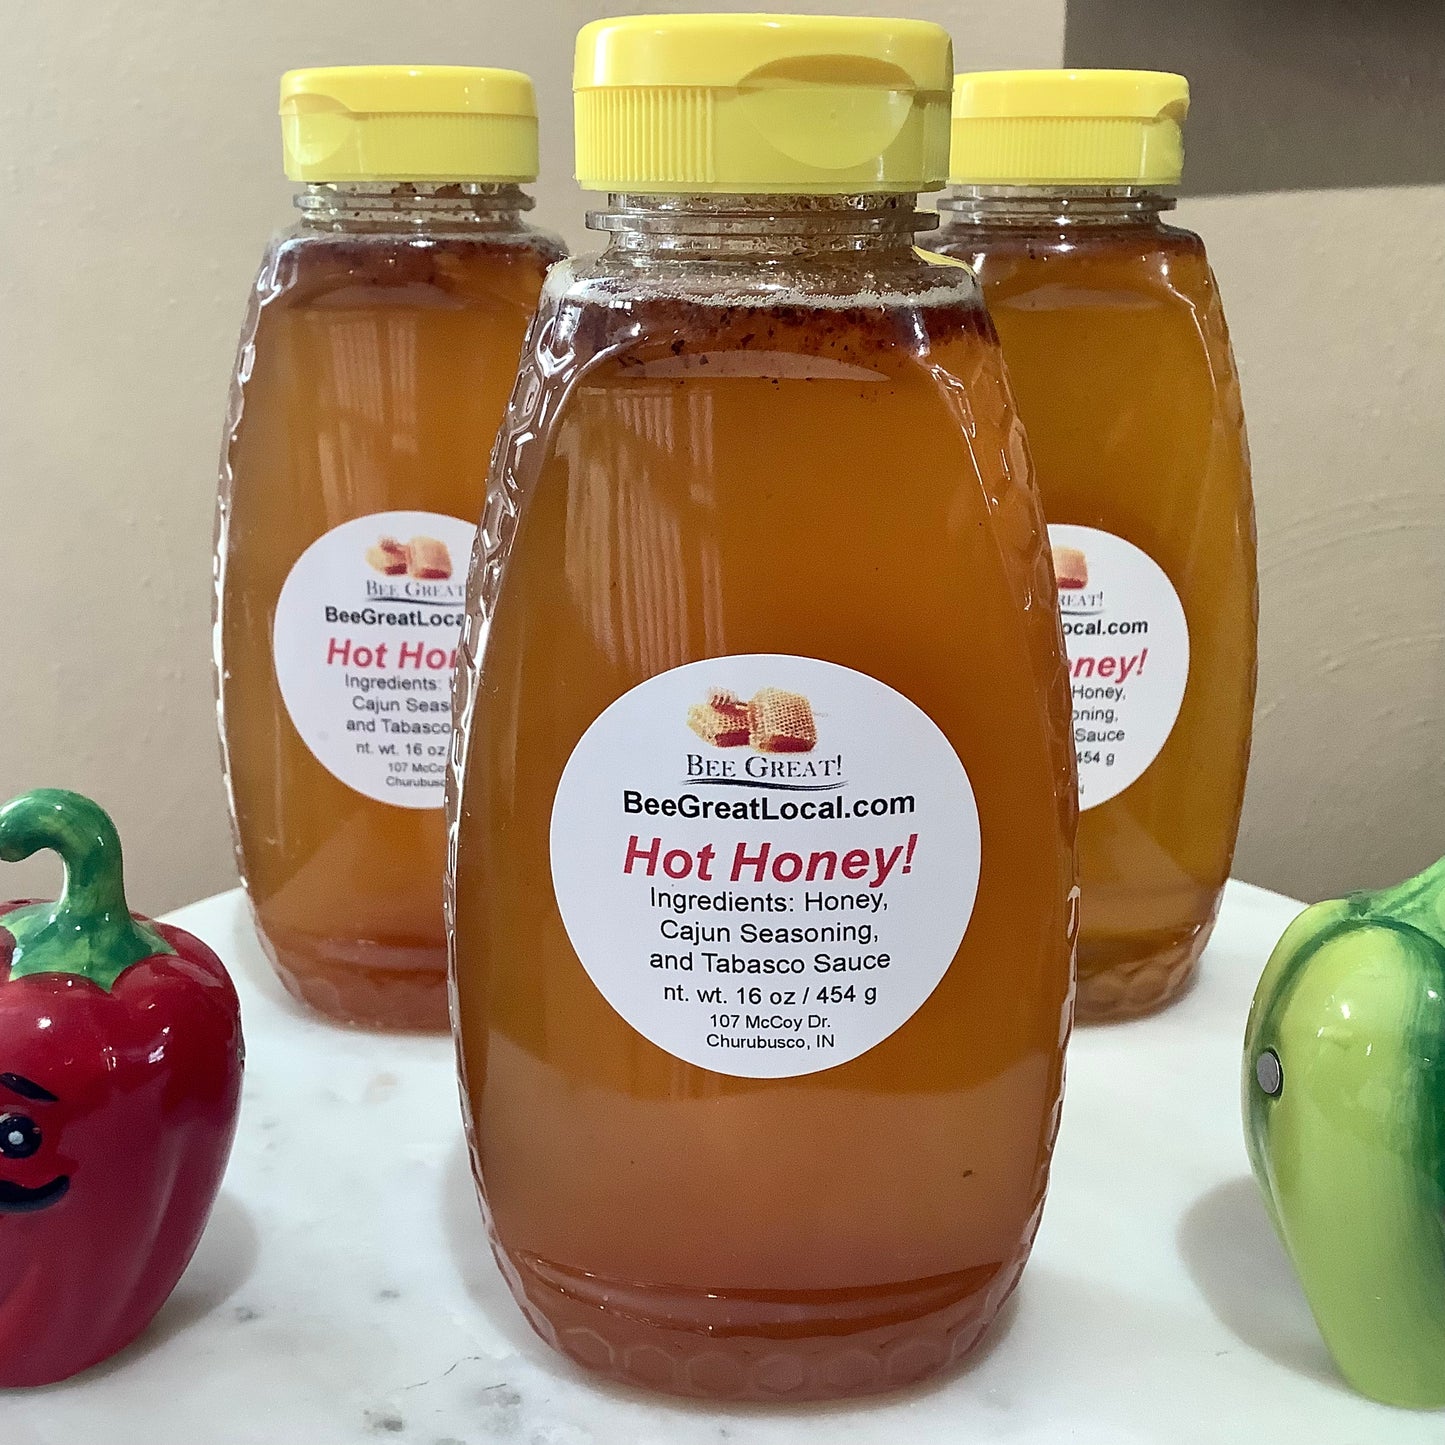 Cajun Hot Honey